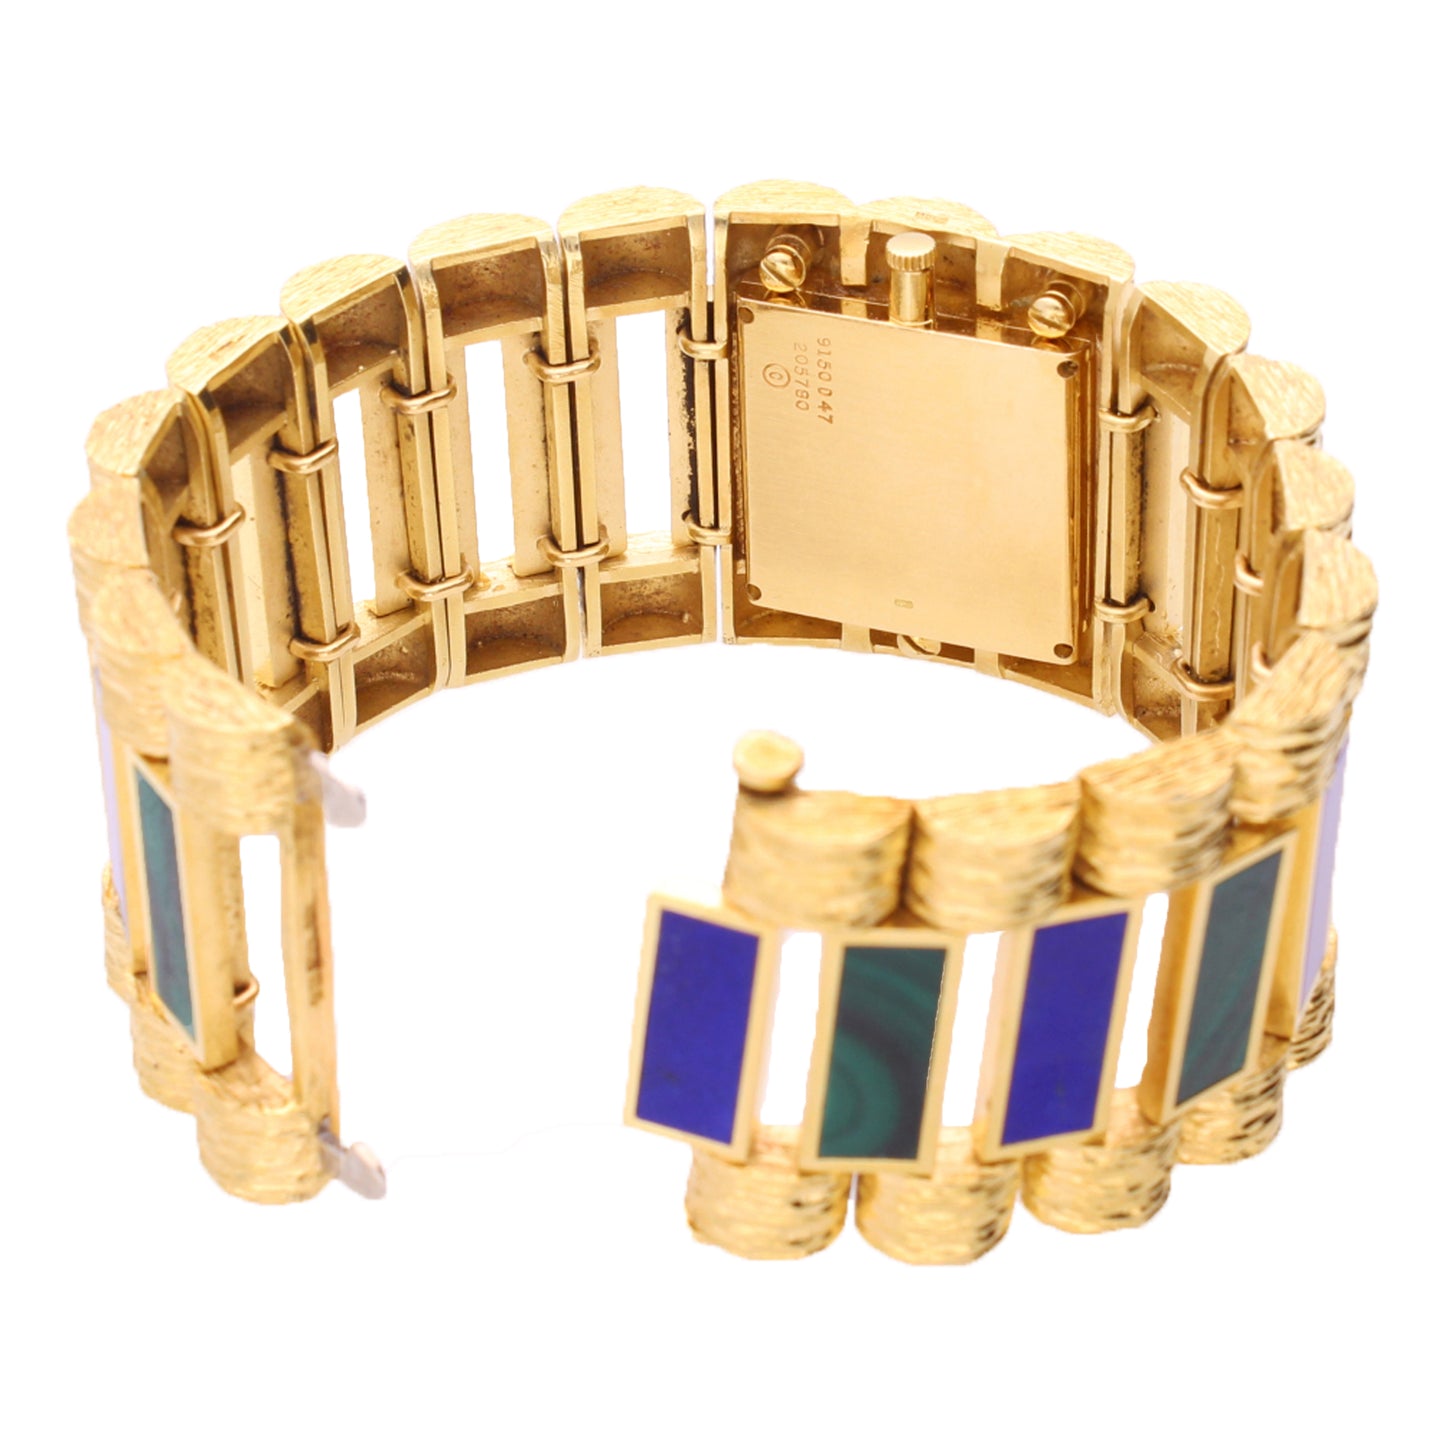 (SOLD) 18ct yellow gold Piaget, reference 9150 malachite and lapis lazuli bracelet watch. Made 1972